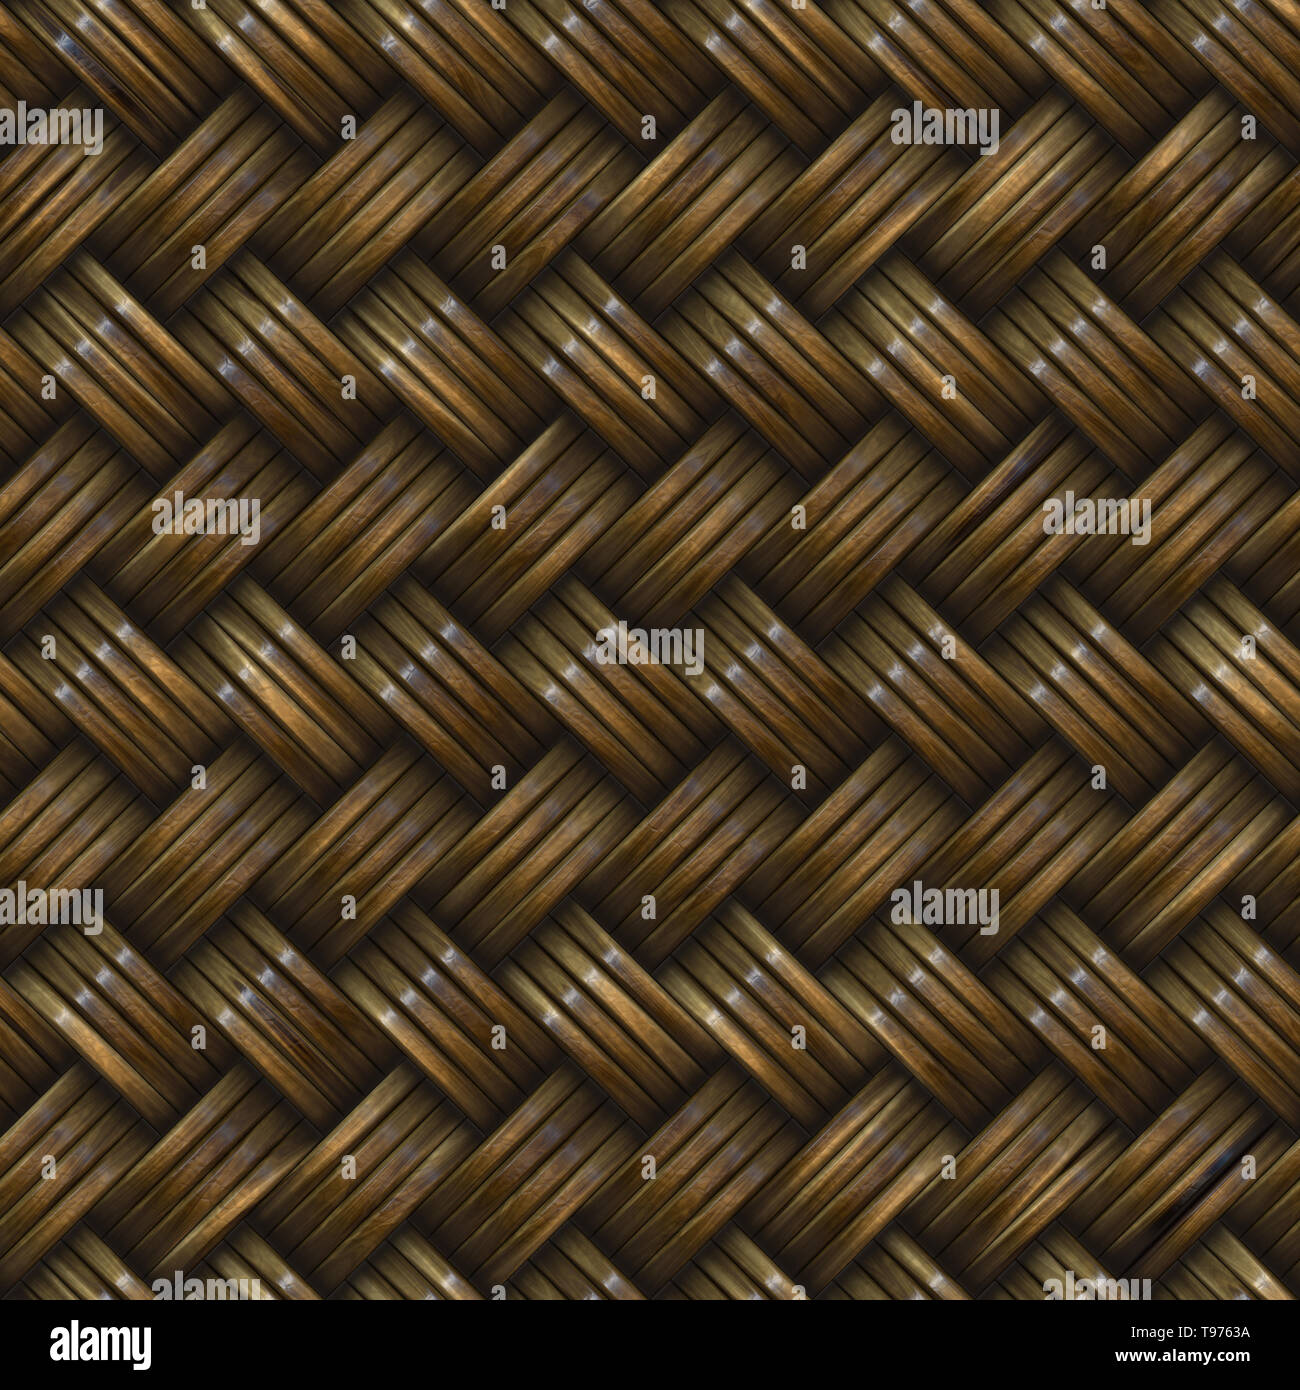 Twill Weave Seamless Texture Tile Stock Photo